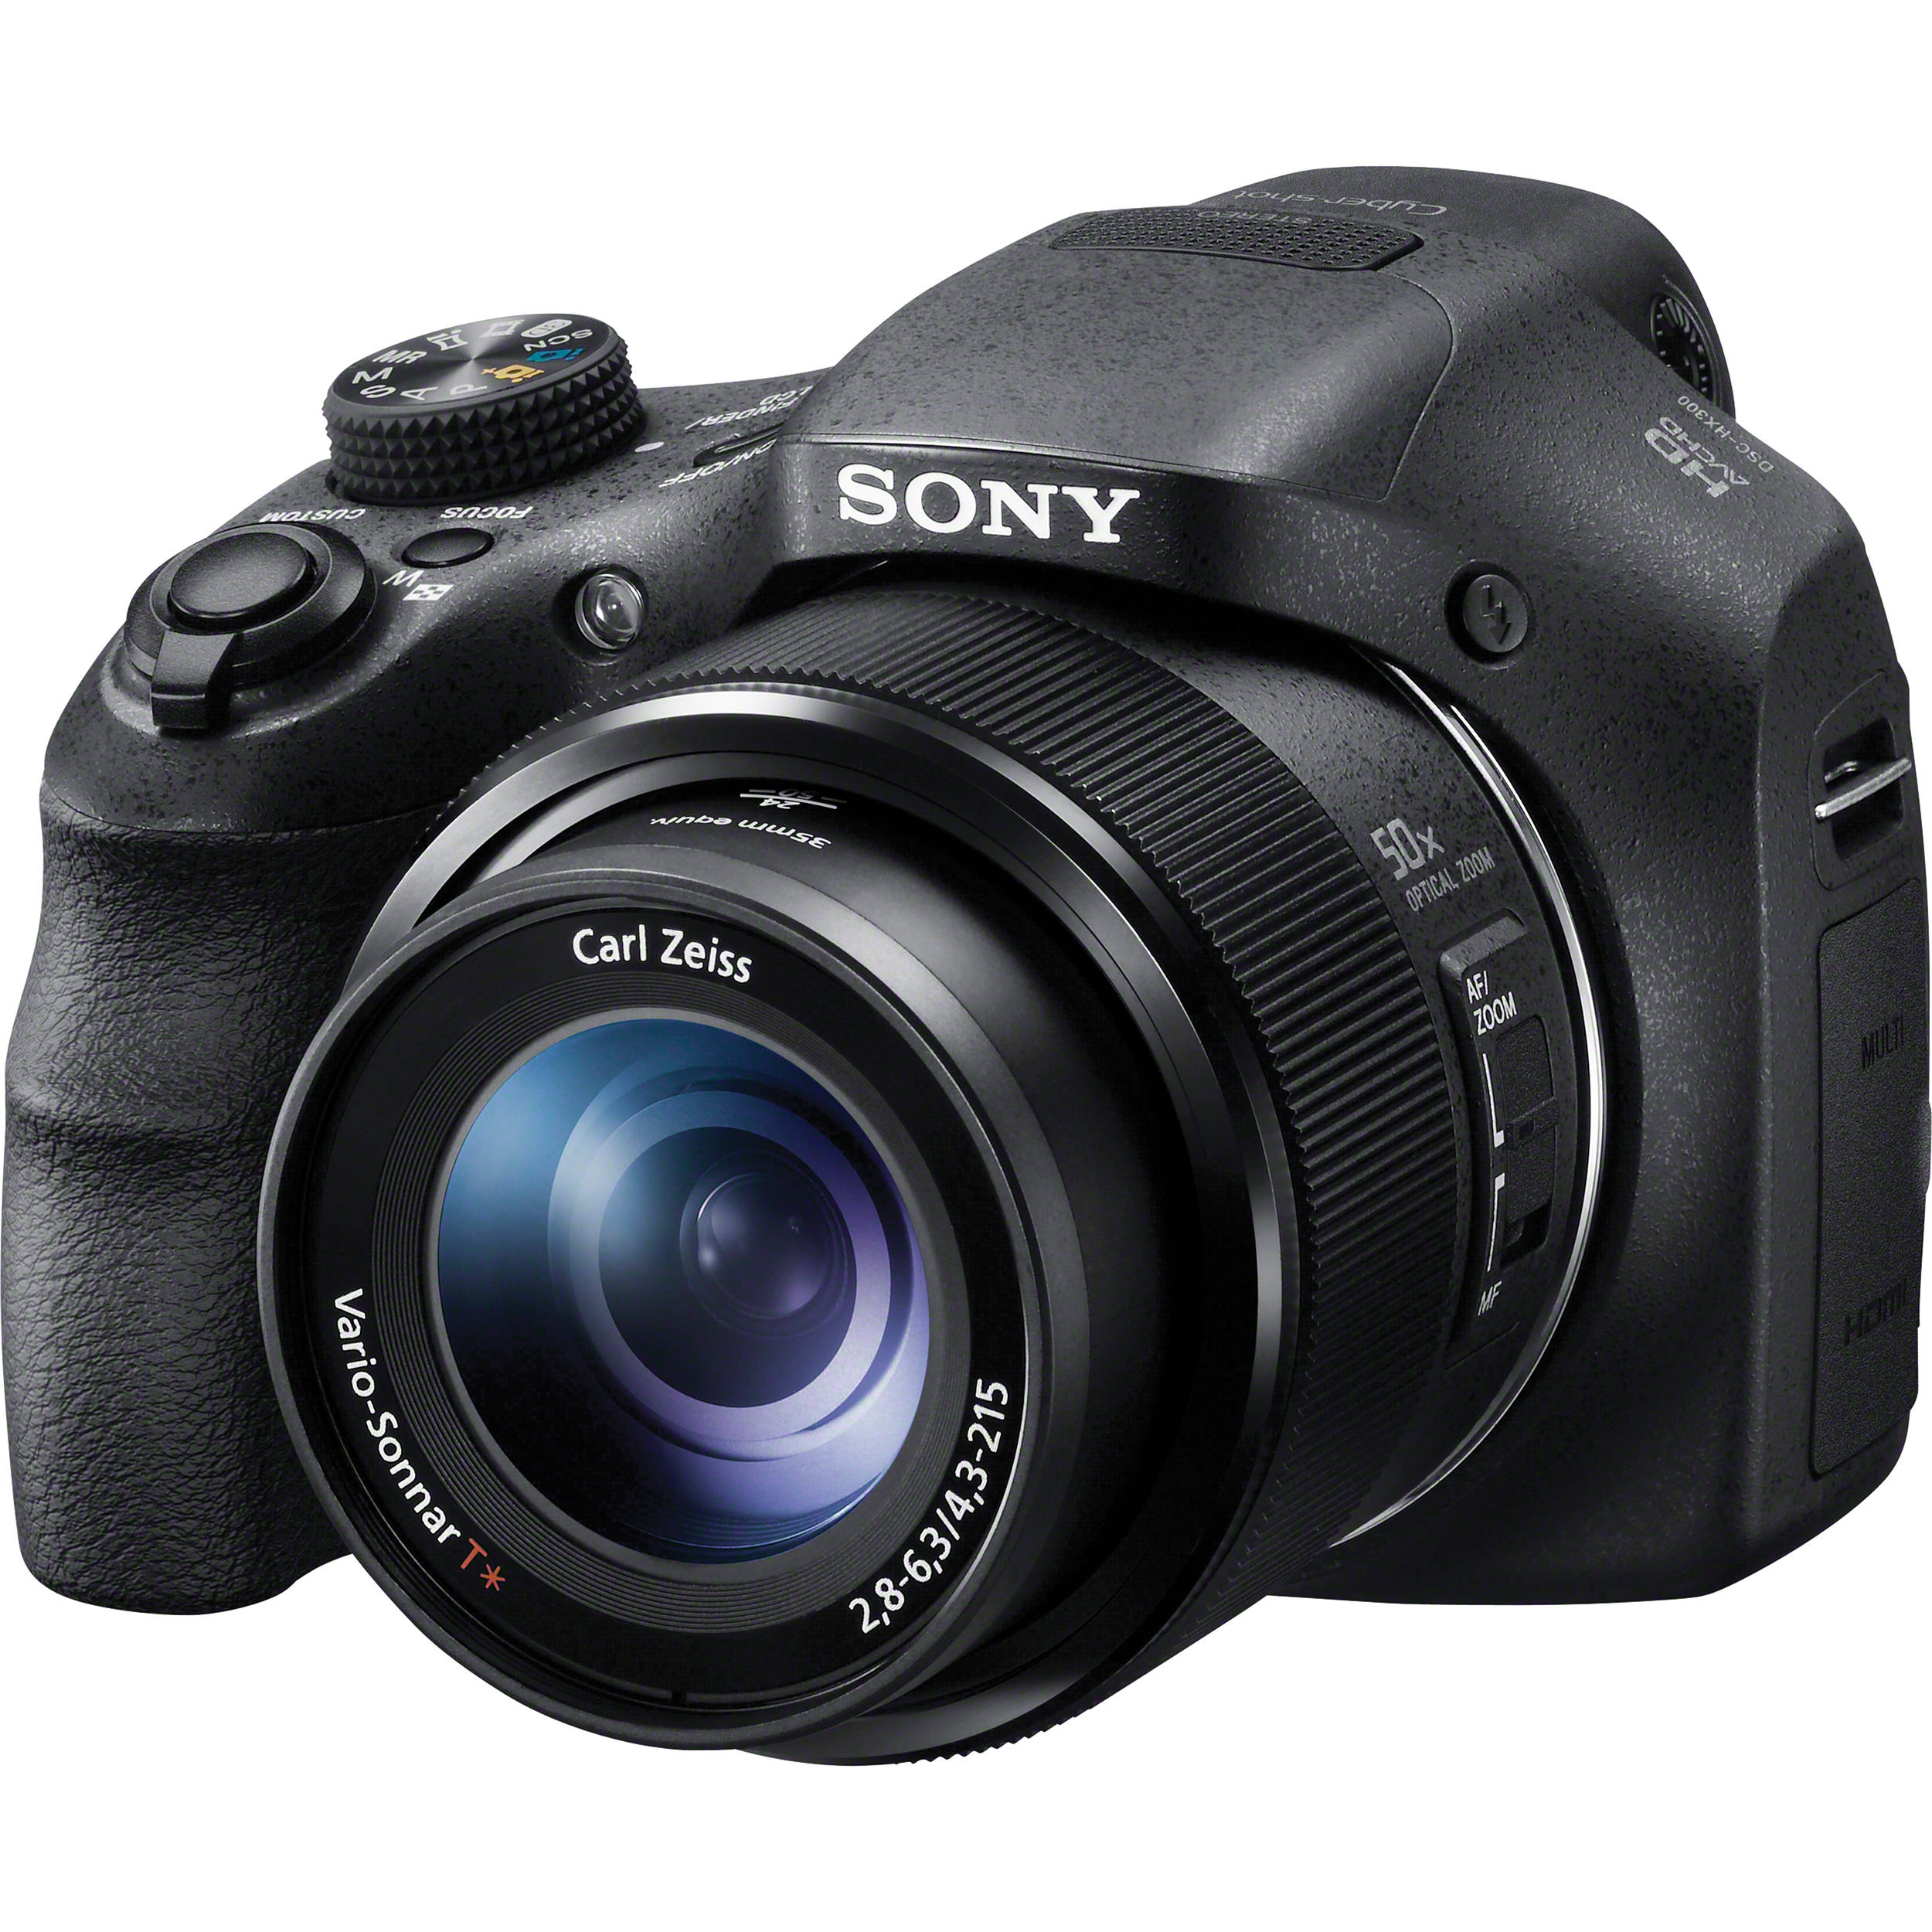 Sony Cyber-shot DSC-HX300 Price, Specs, Where to Buy | Camera News at